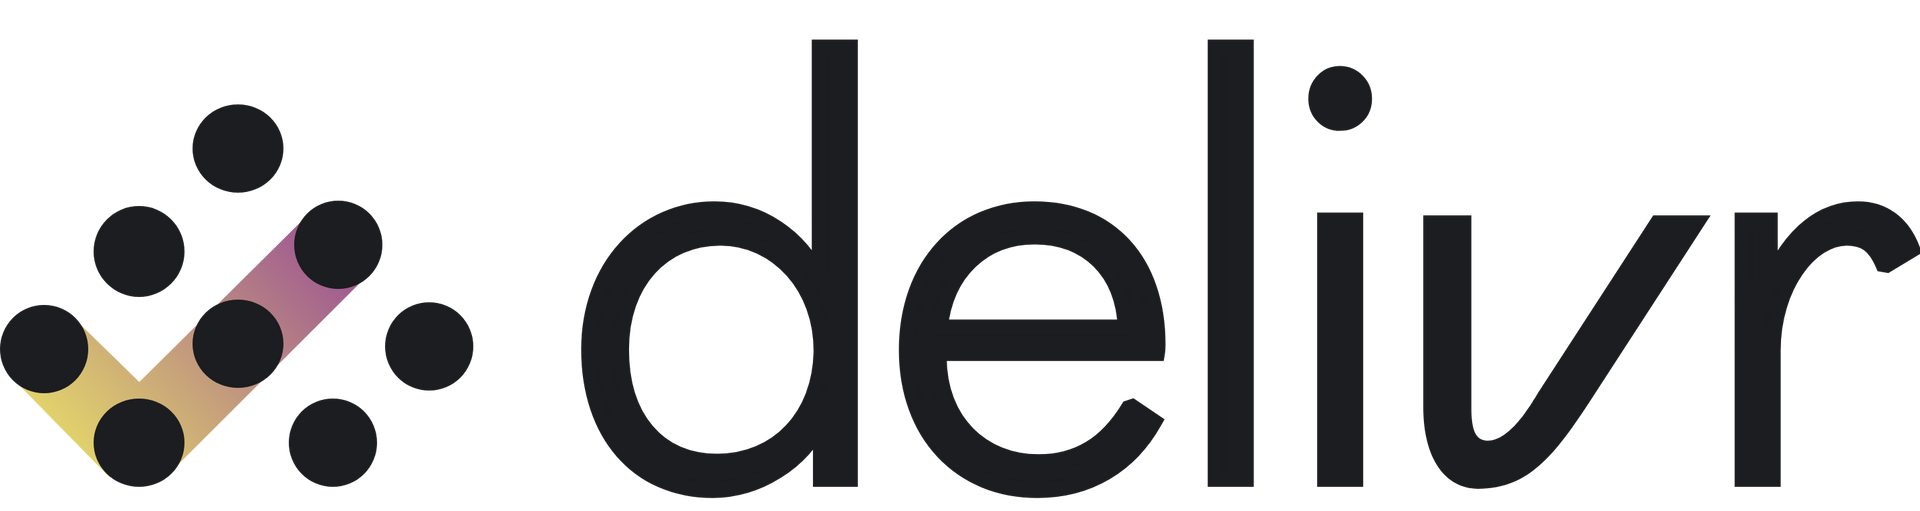 Delivr.ai logo